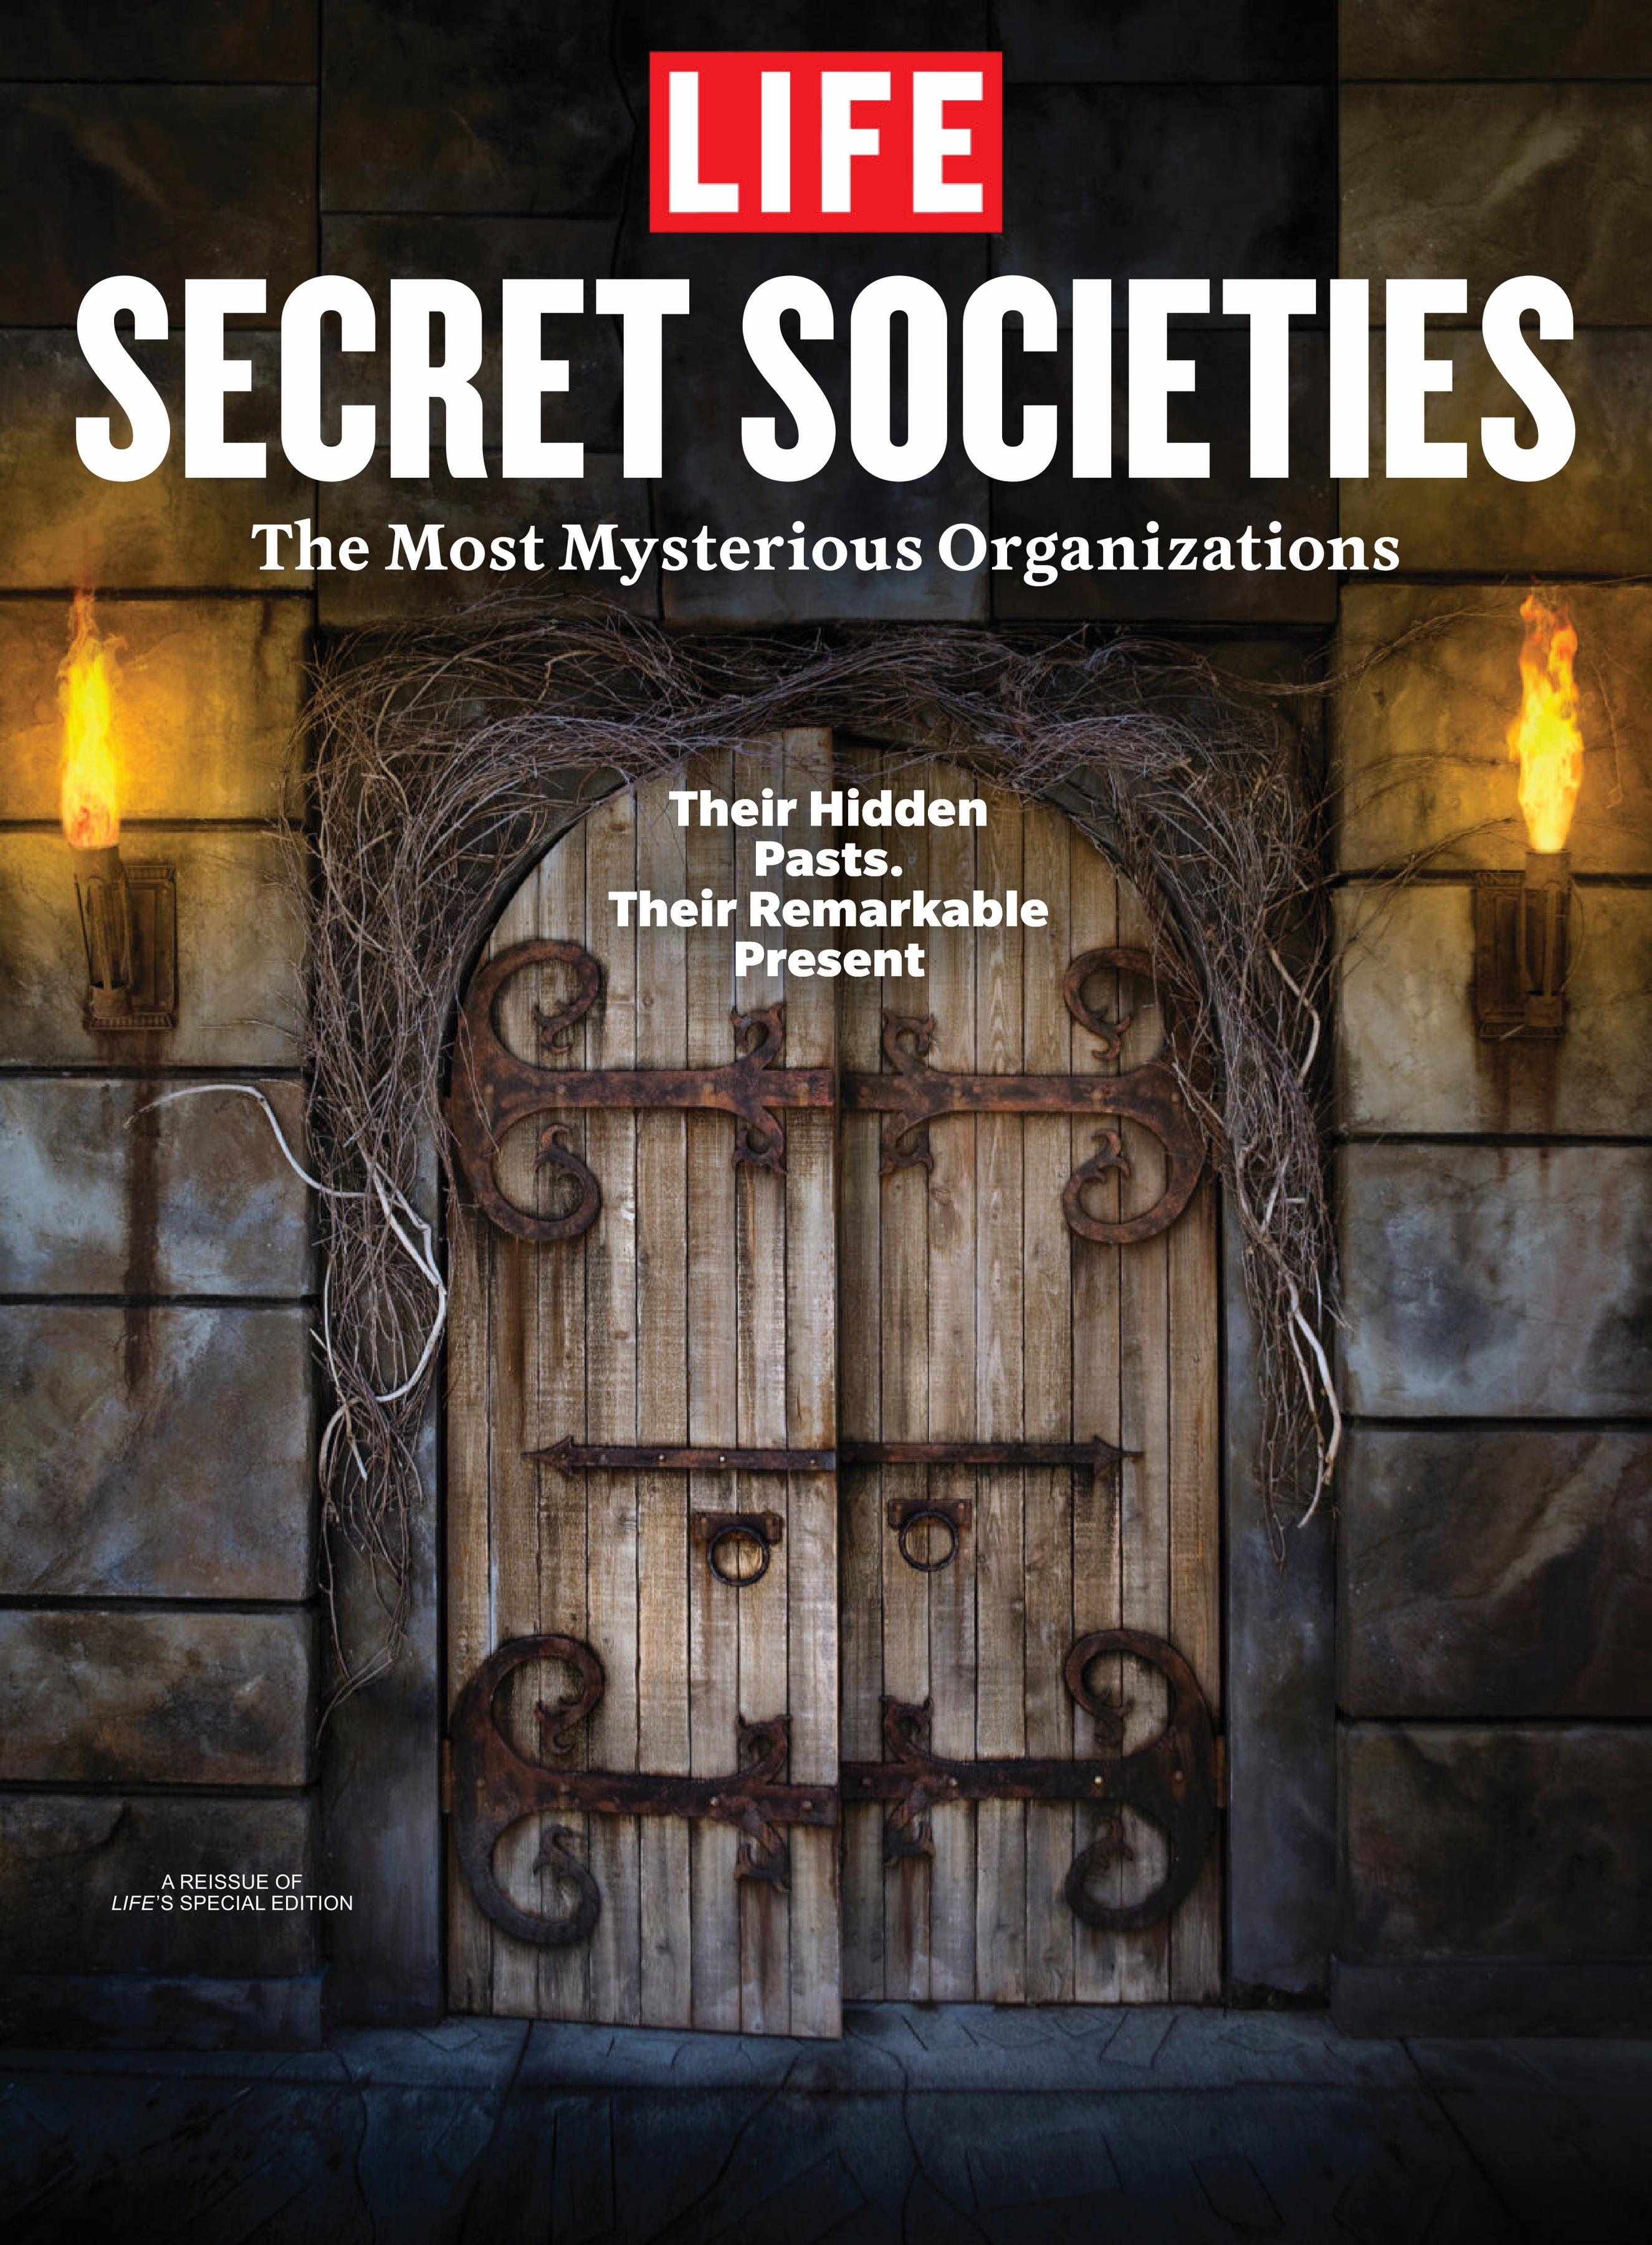 Societies журнал. Secret Society. Secret Societies on Magazine.